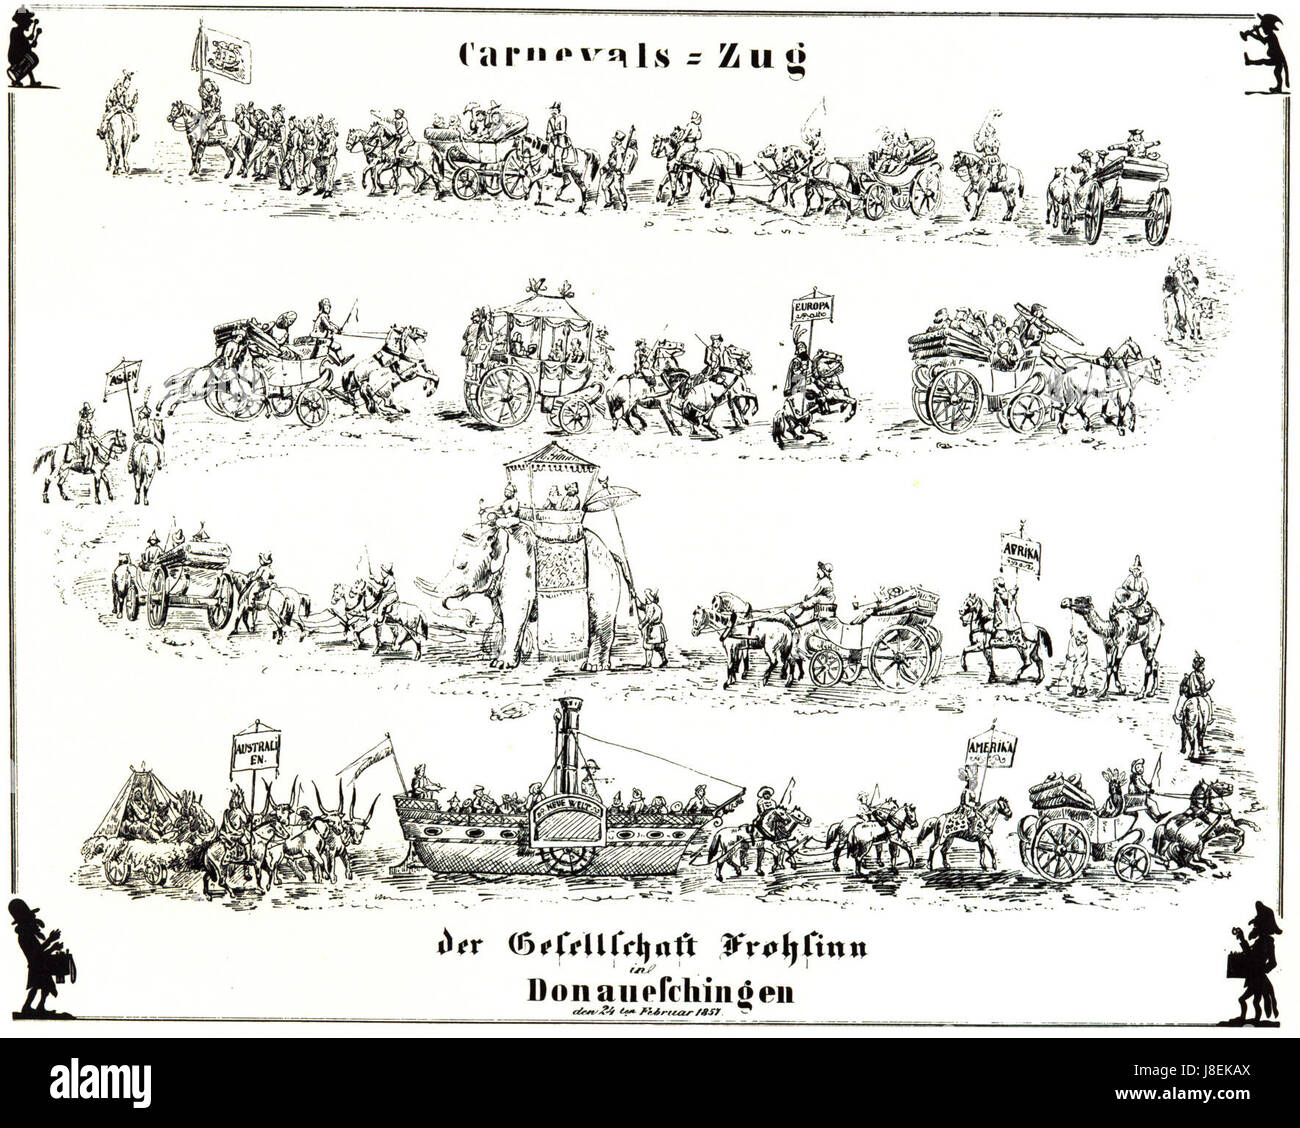 Donaueschingen Carnevals Zug 1857 Stock Photo